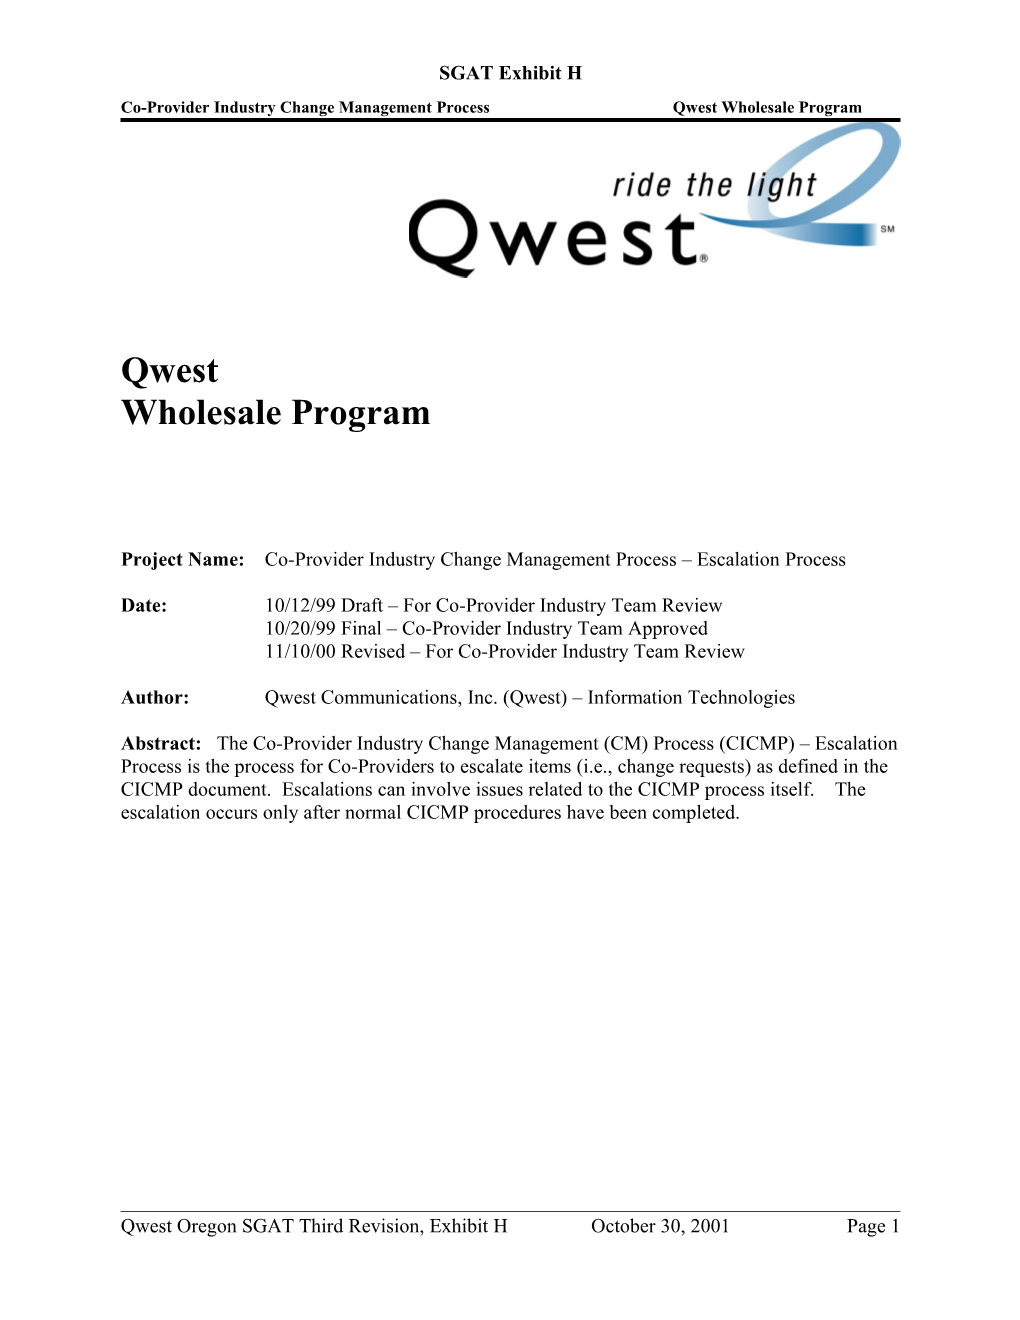 Co-Provider Industry Change Management Processqwest Wholesale Program